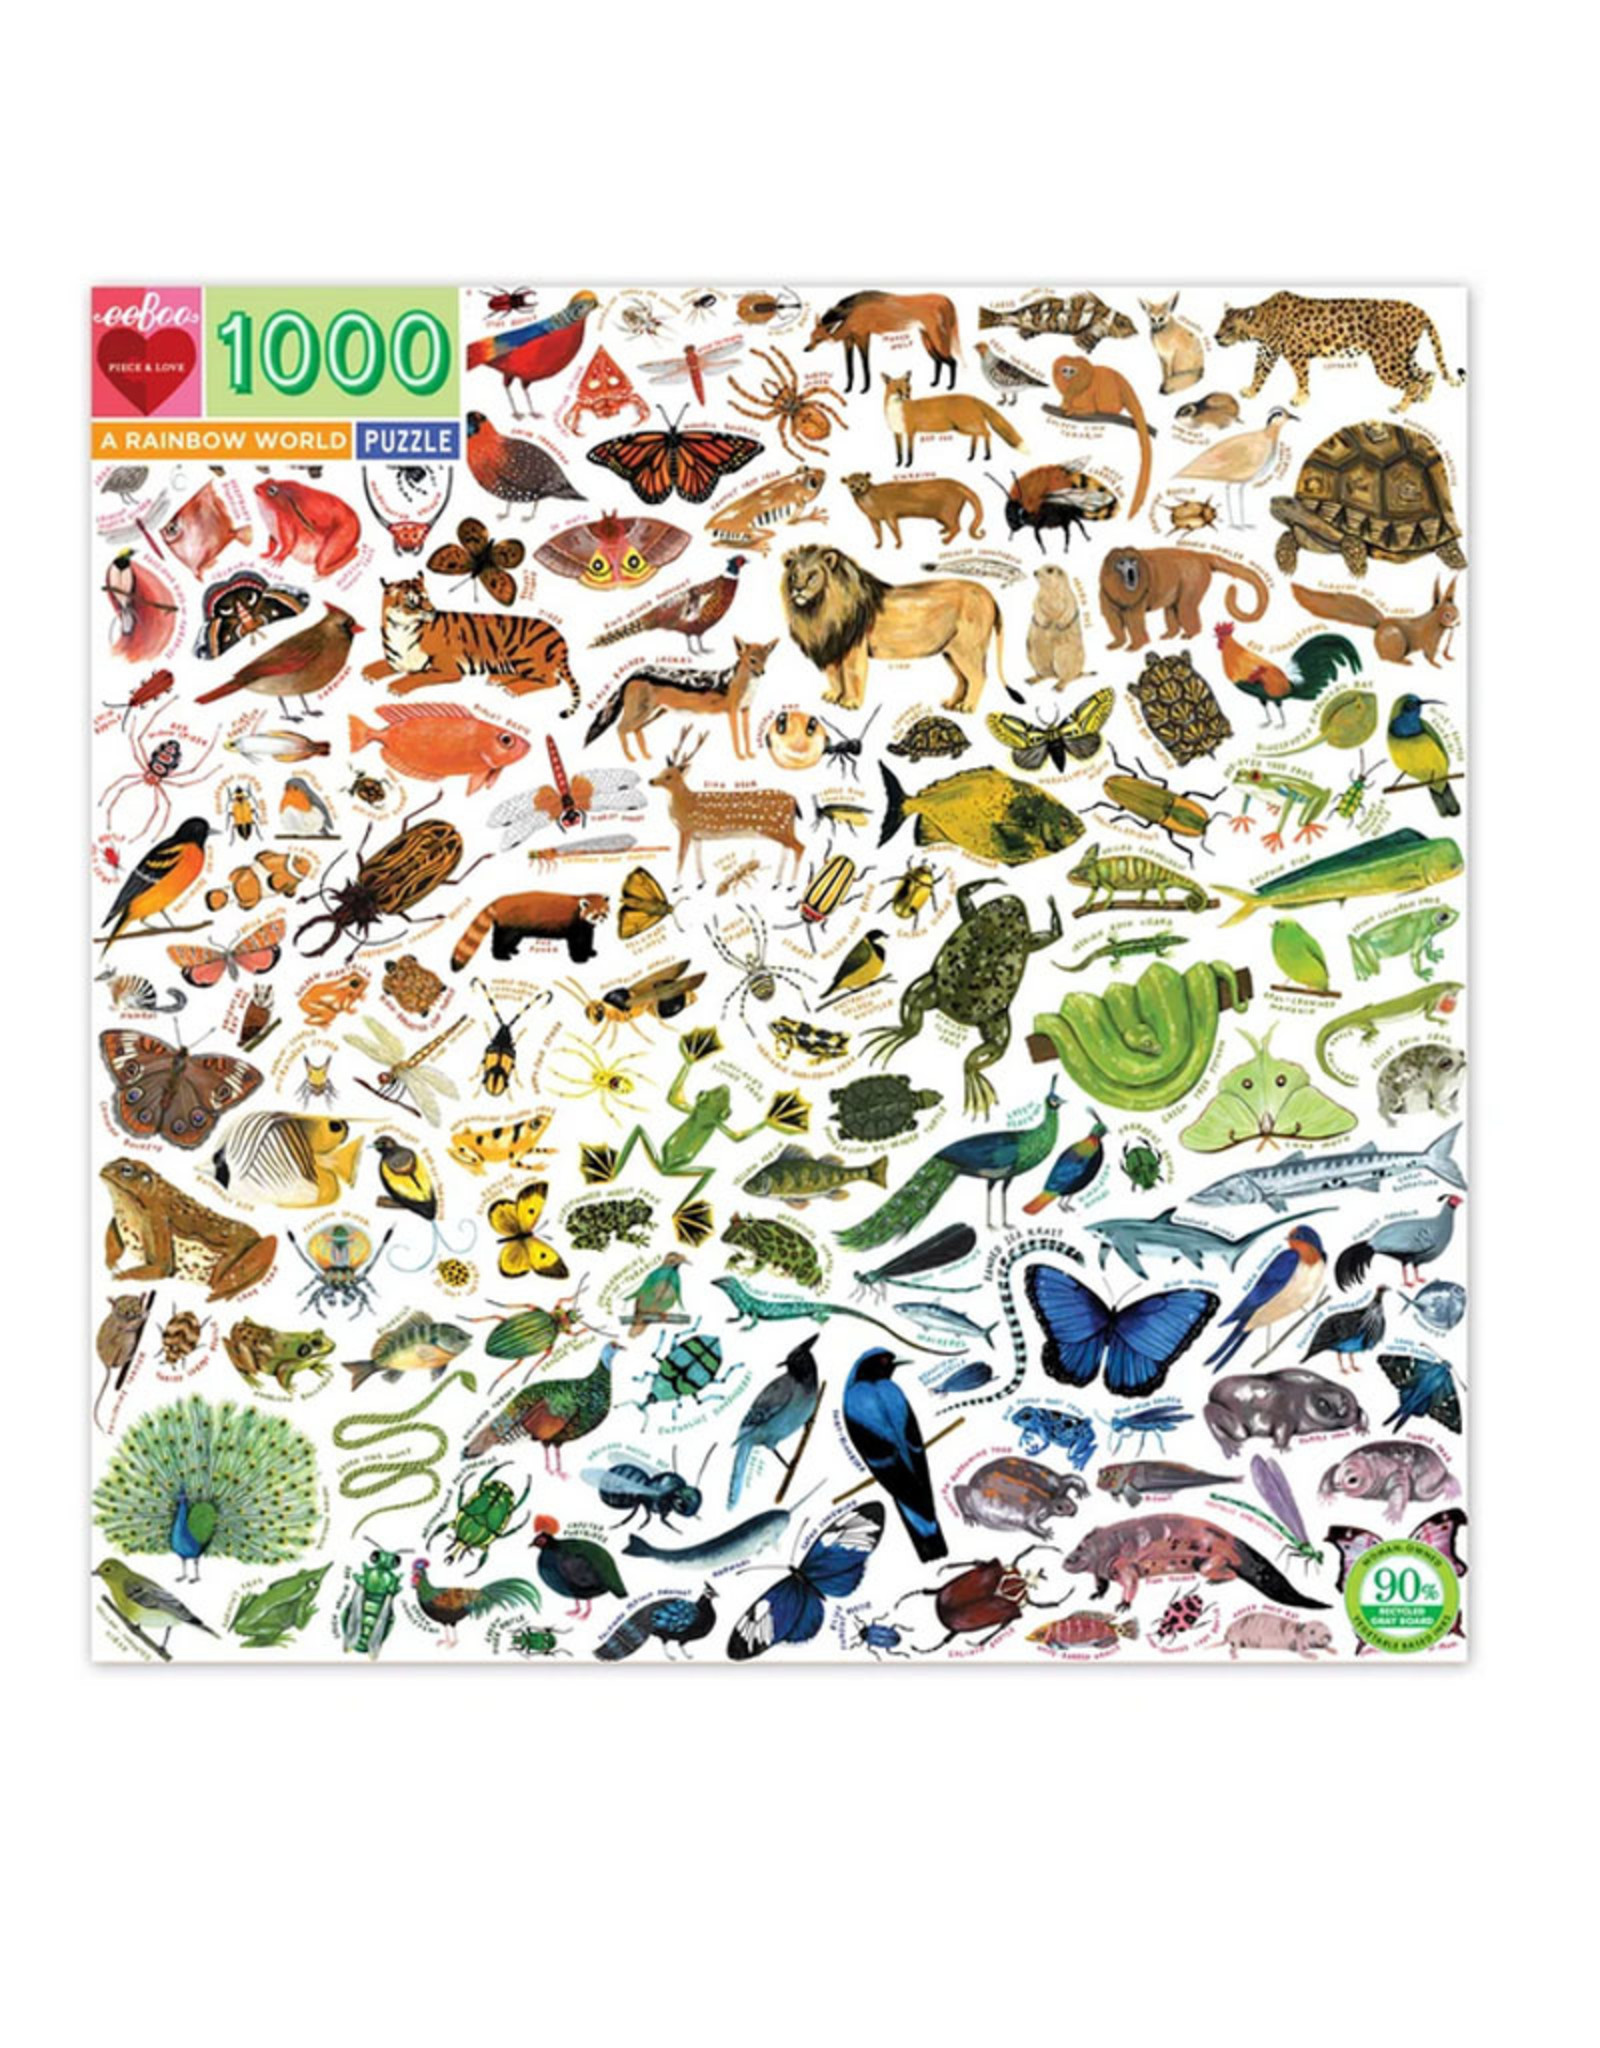 eeBoo Puzzle 1000 Piece: A Rainbow World